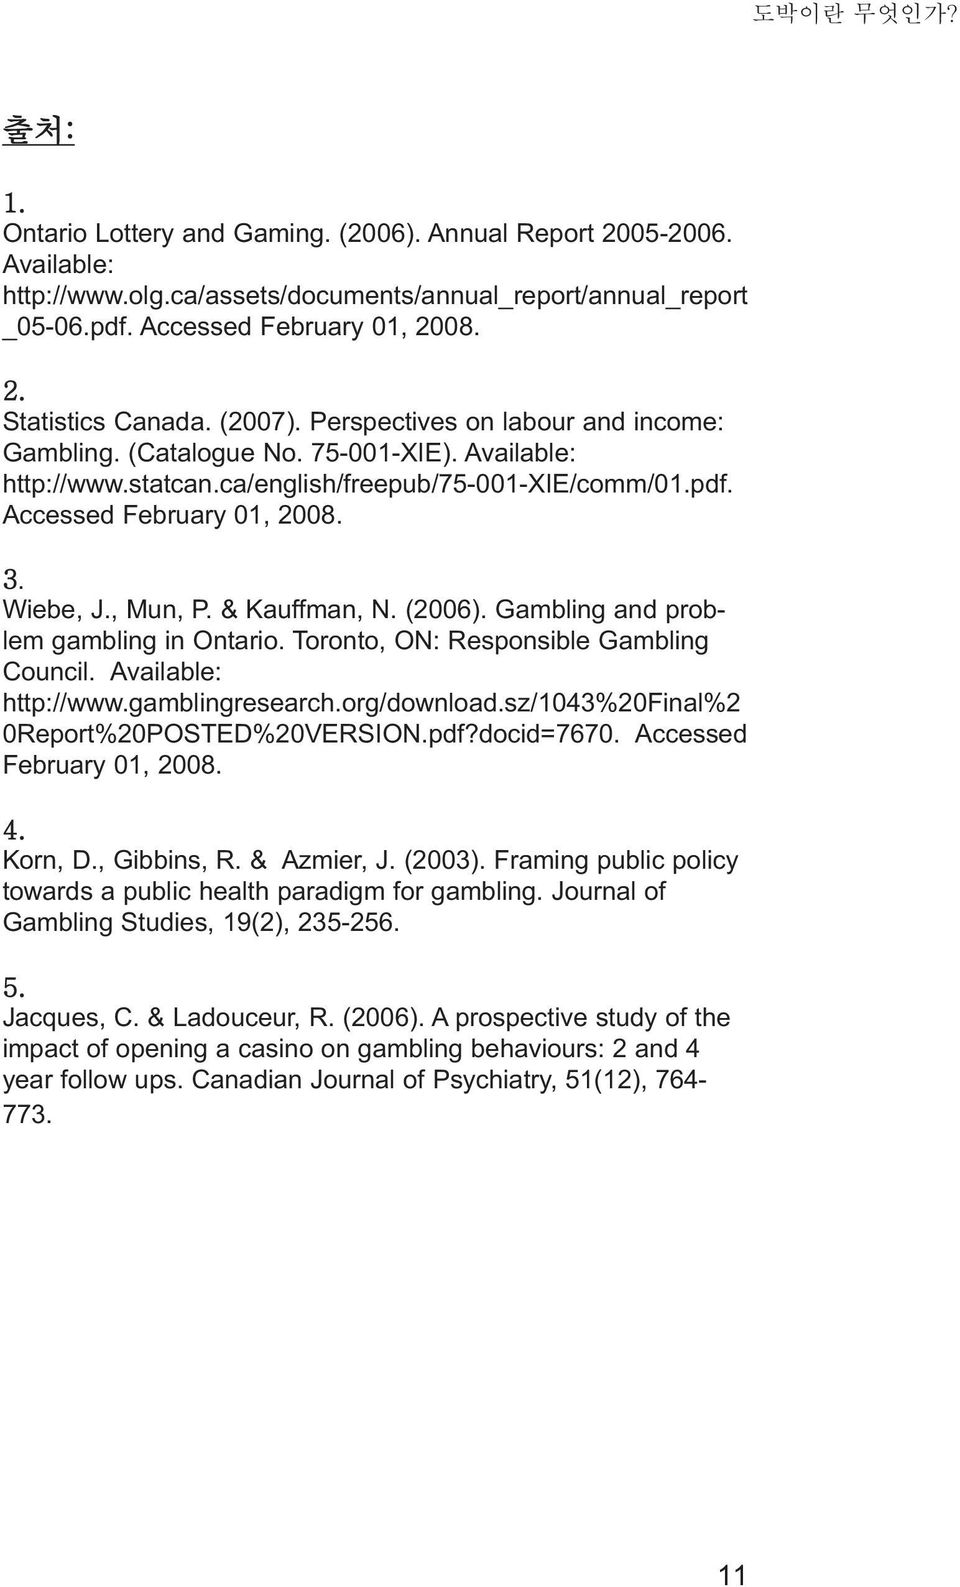 , Mun, P. & Kauffman, N. (2006). Gambling and problem gambling in Ontario. Toronto, ON: Responsible Gambling Council. Available: http://www.gamblingresearch.org/download.